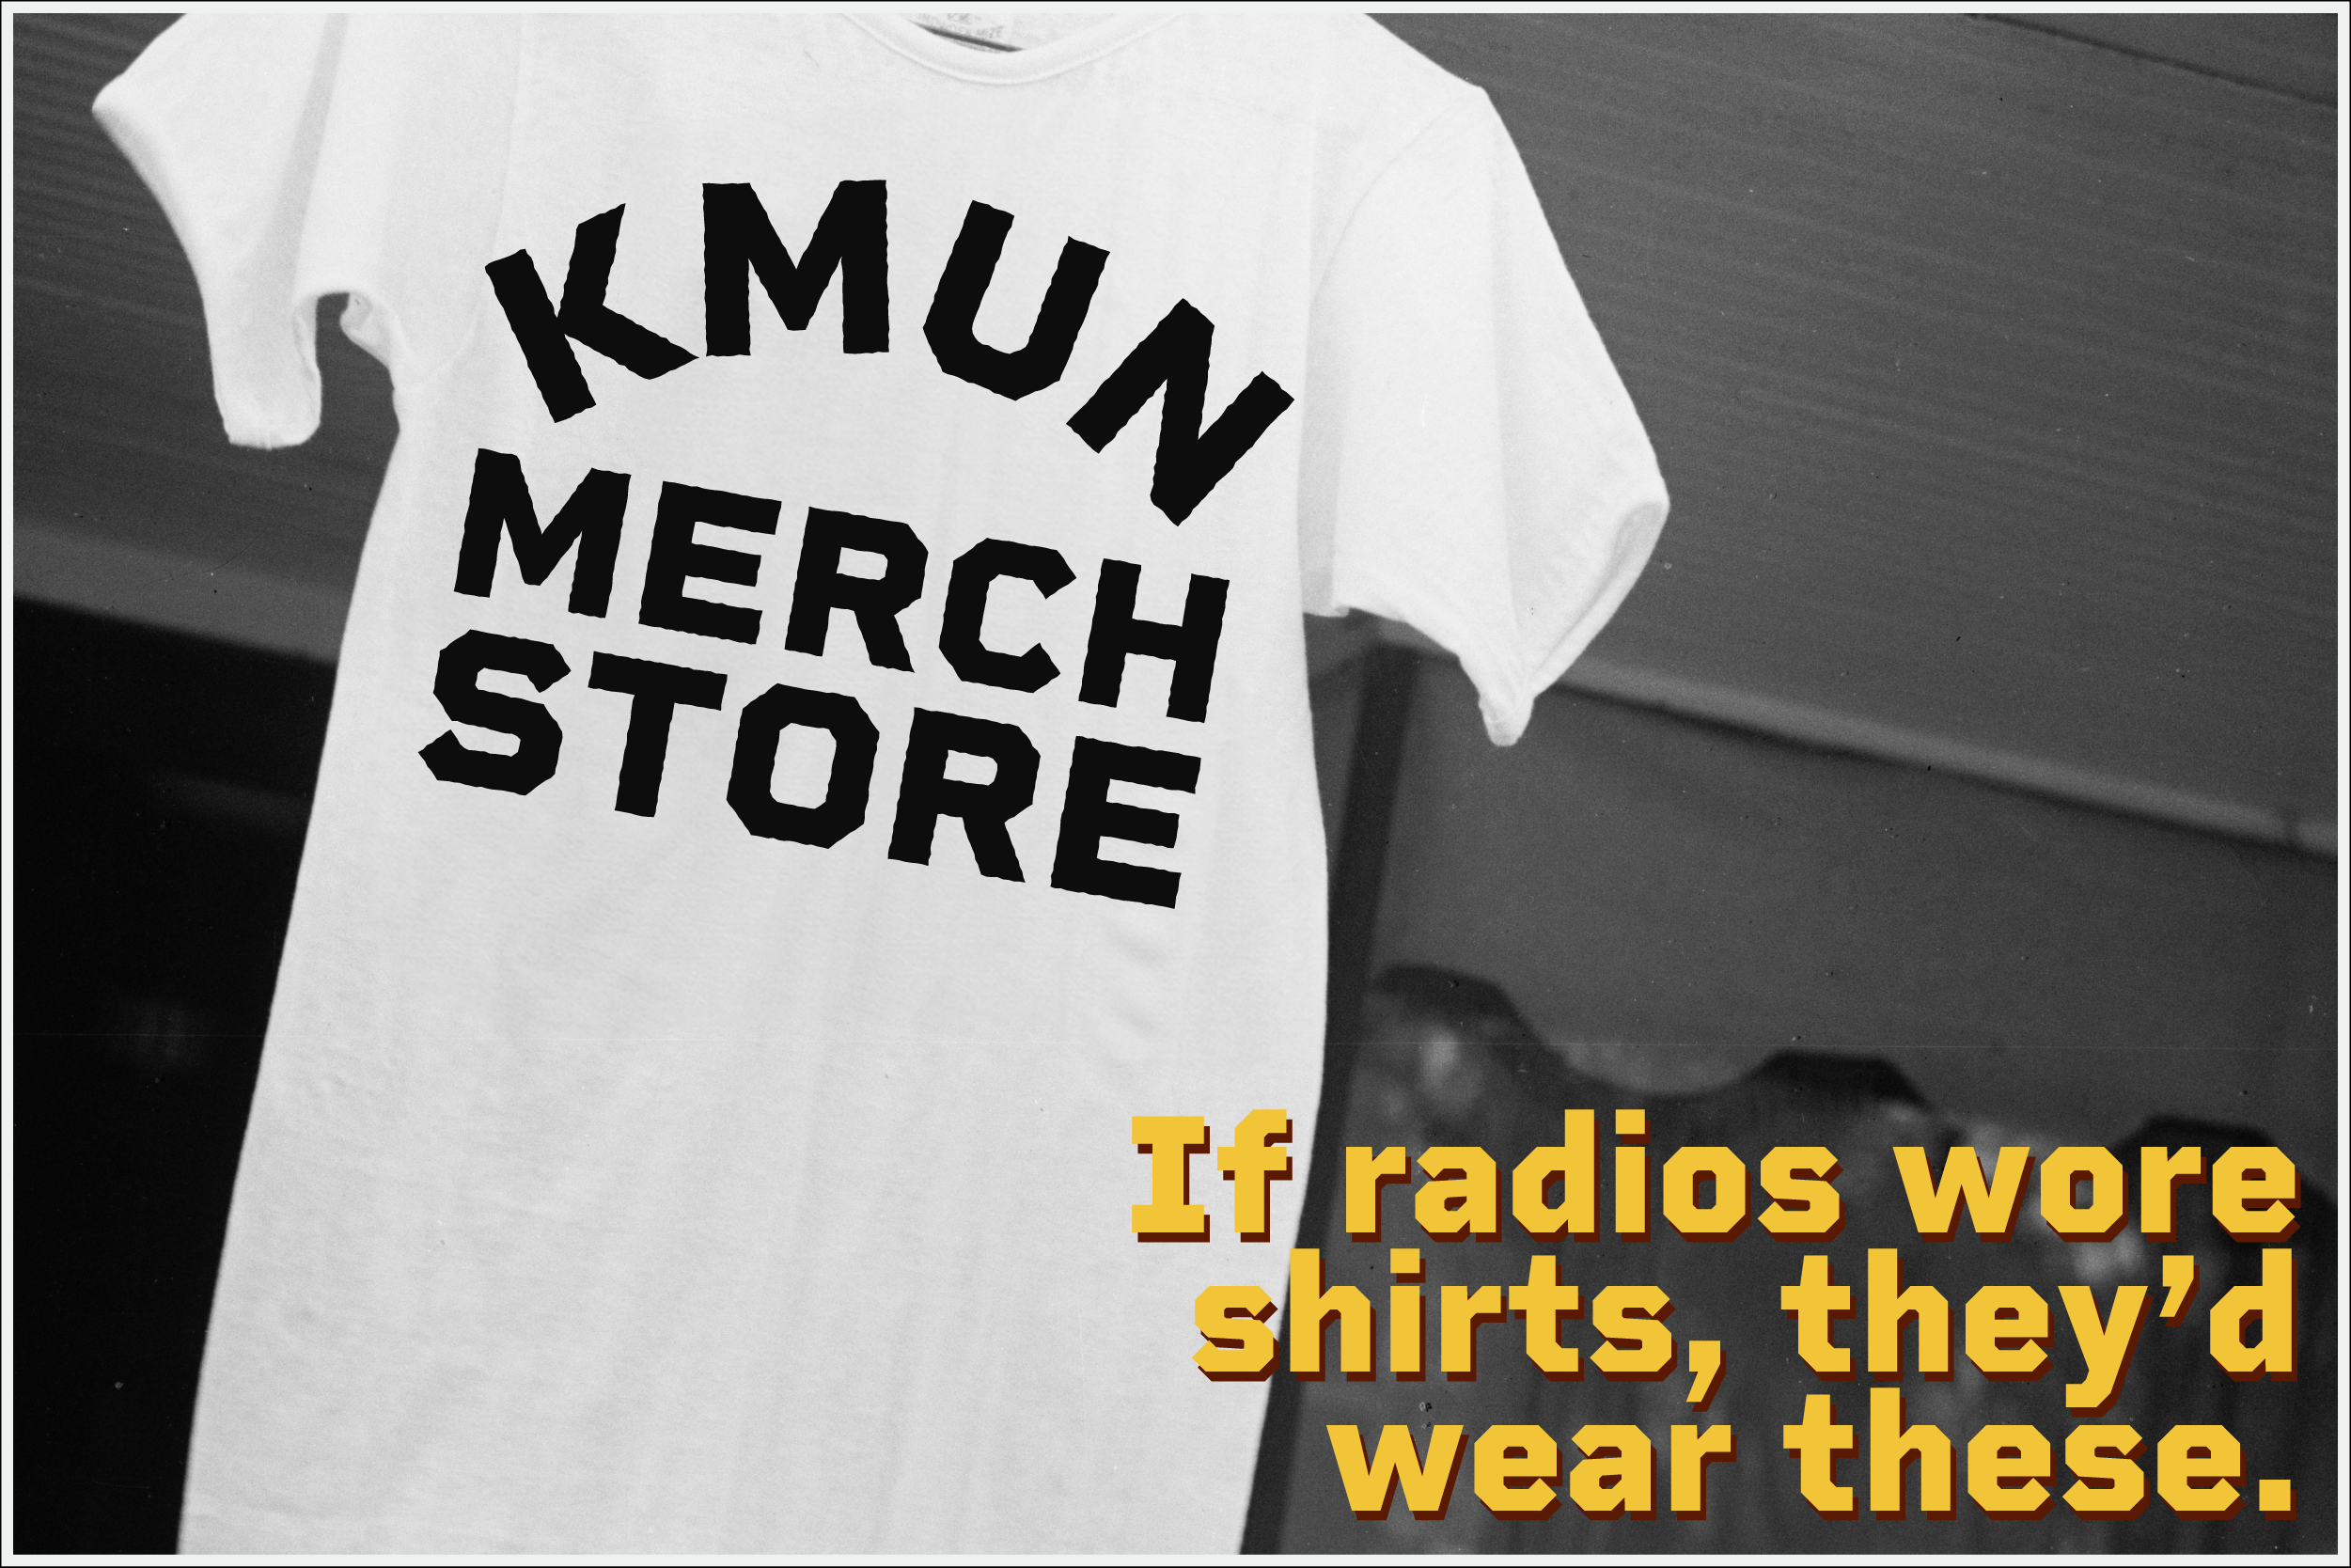 kmun merch store click here to buy kmun gear